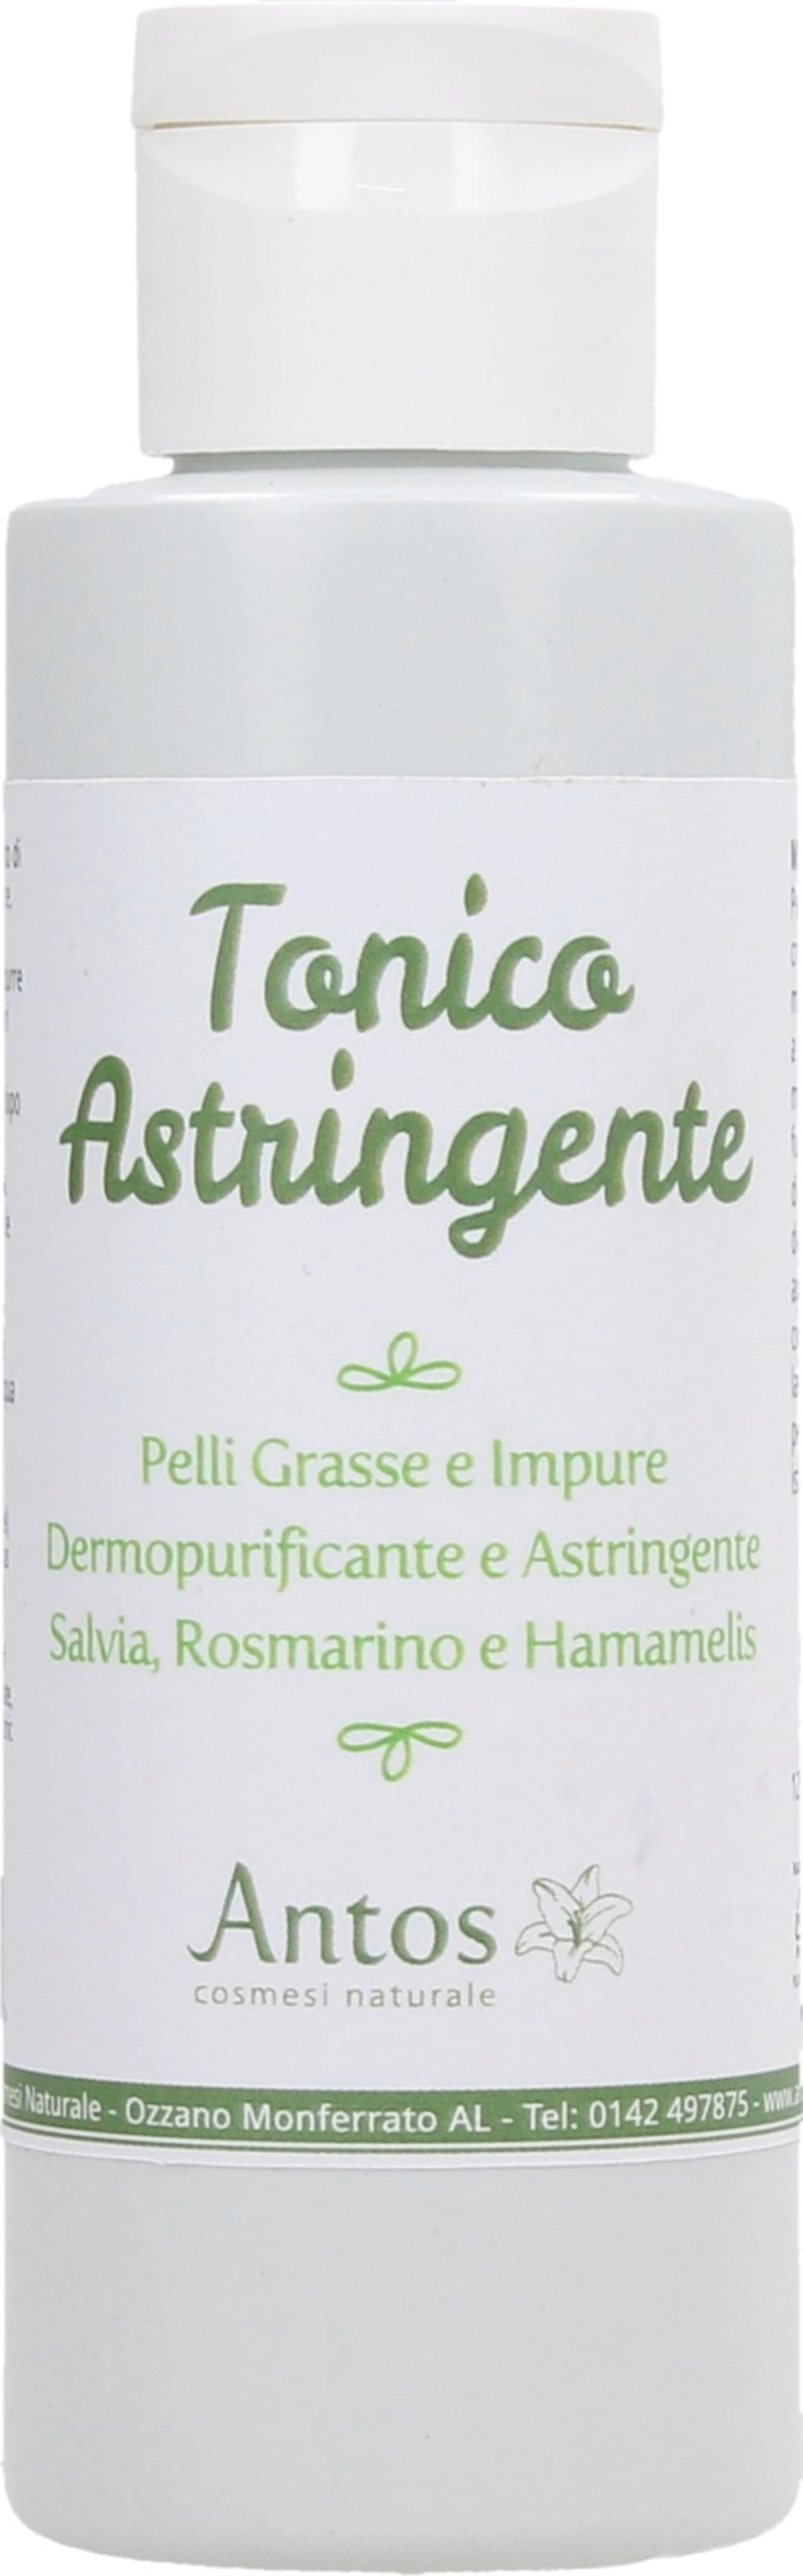 Antos Tónico Astringente - 125 ml